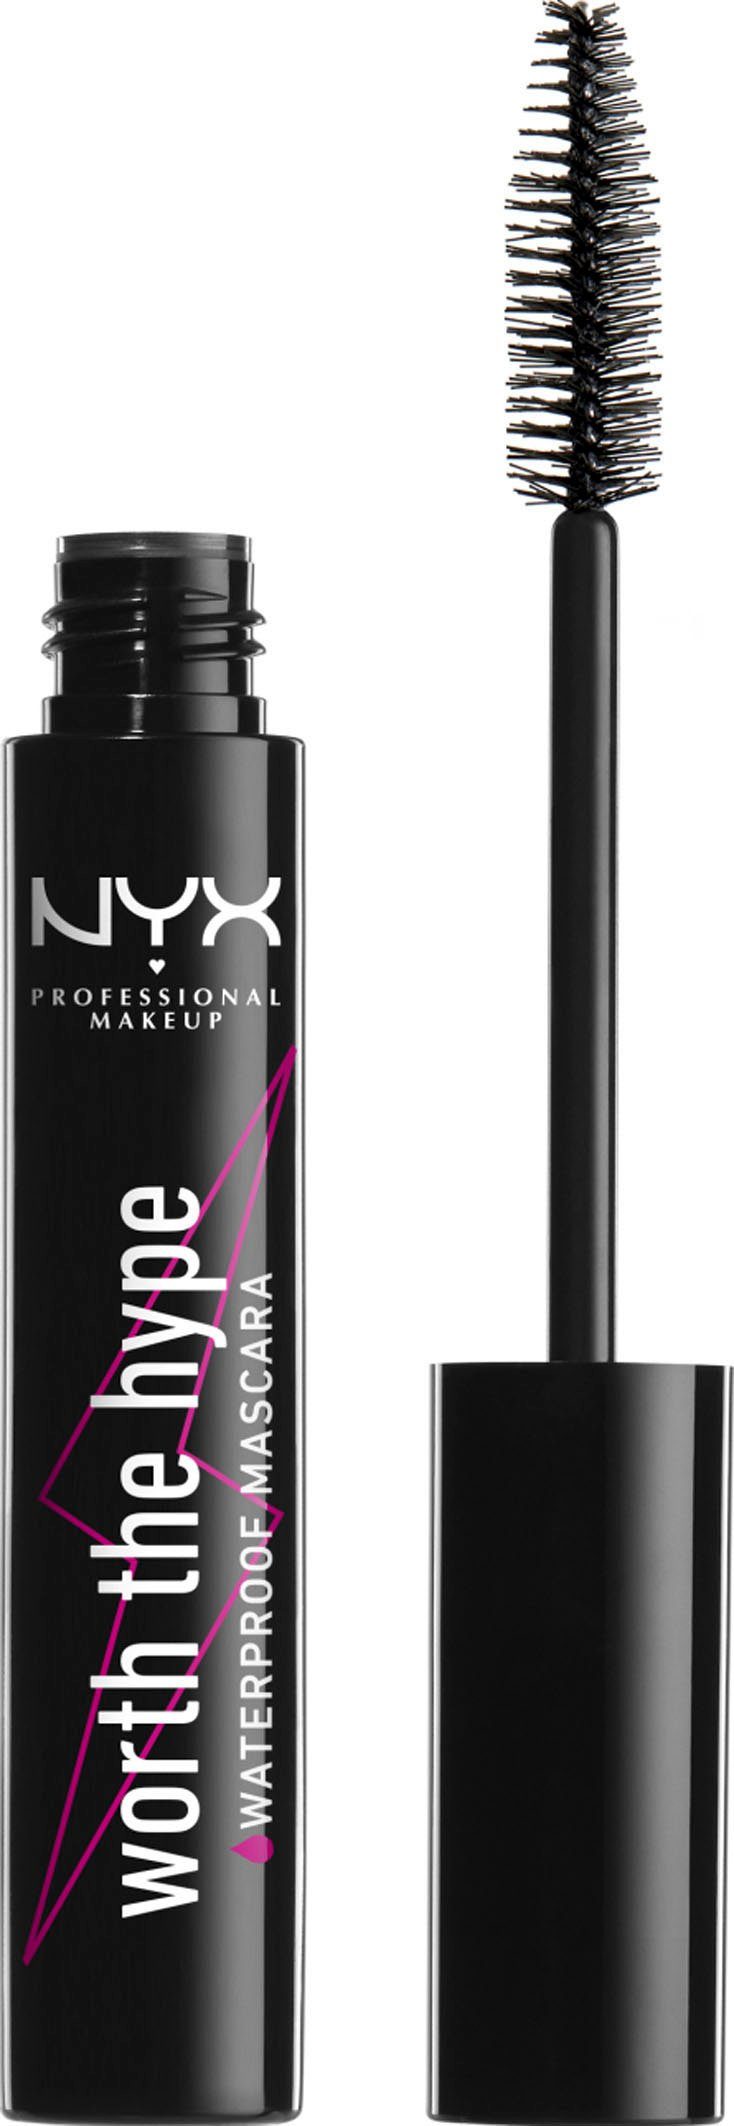 NYX Mascara Professional Makeup Worth The Hype Waterproof Mascara